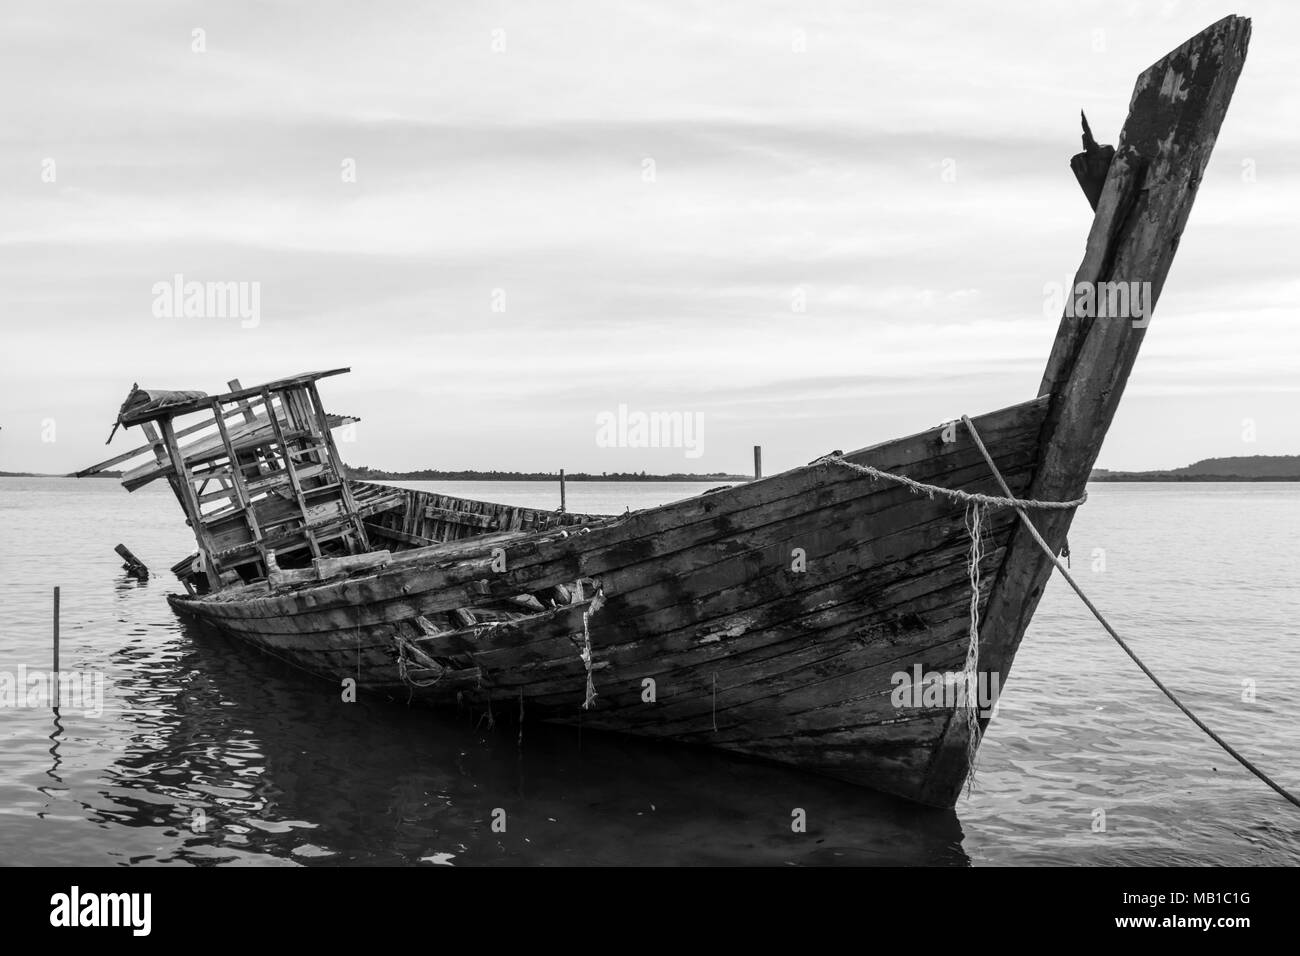 A shipwreck/wooden ship/wooden boats/abandoned boats on the beach - Bintan island, Indonesia Stock Photo